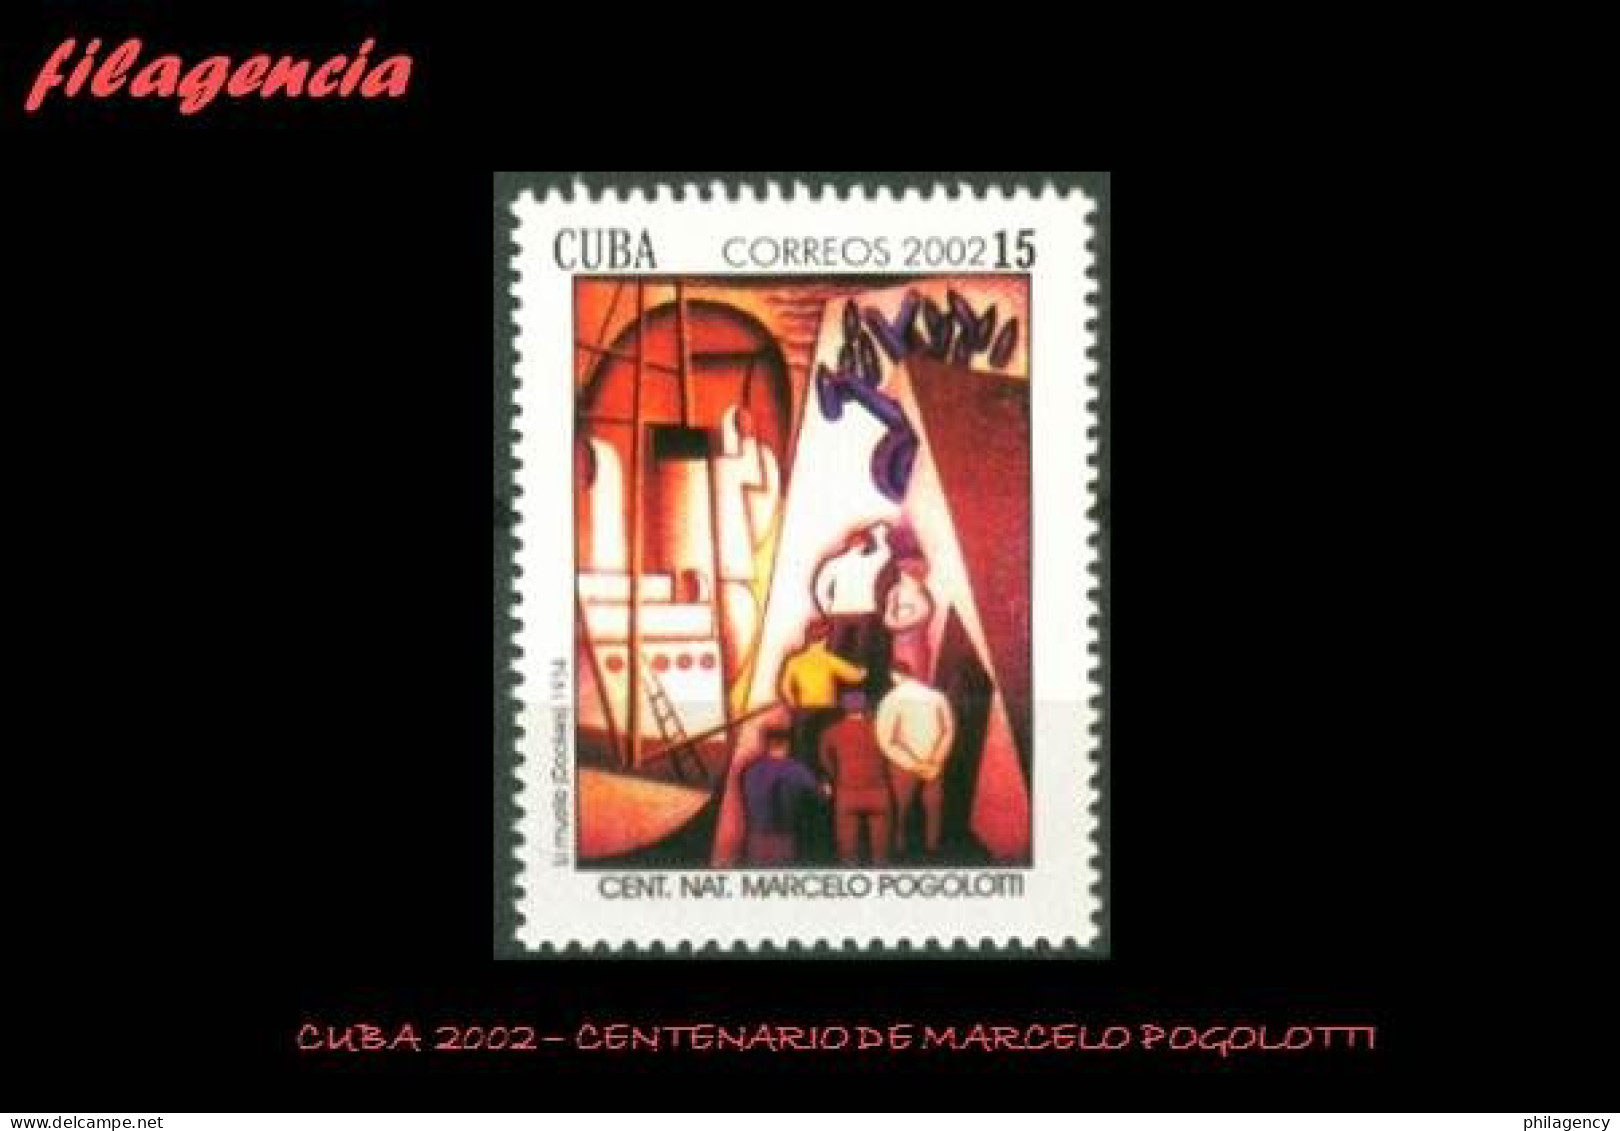 CUBA MINT. 2002-13 CENTENARIO DEL PINTOR CUBANO MARCELO POGOLOTTI - Nuevos